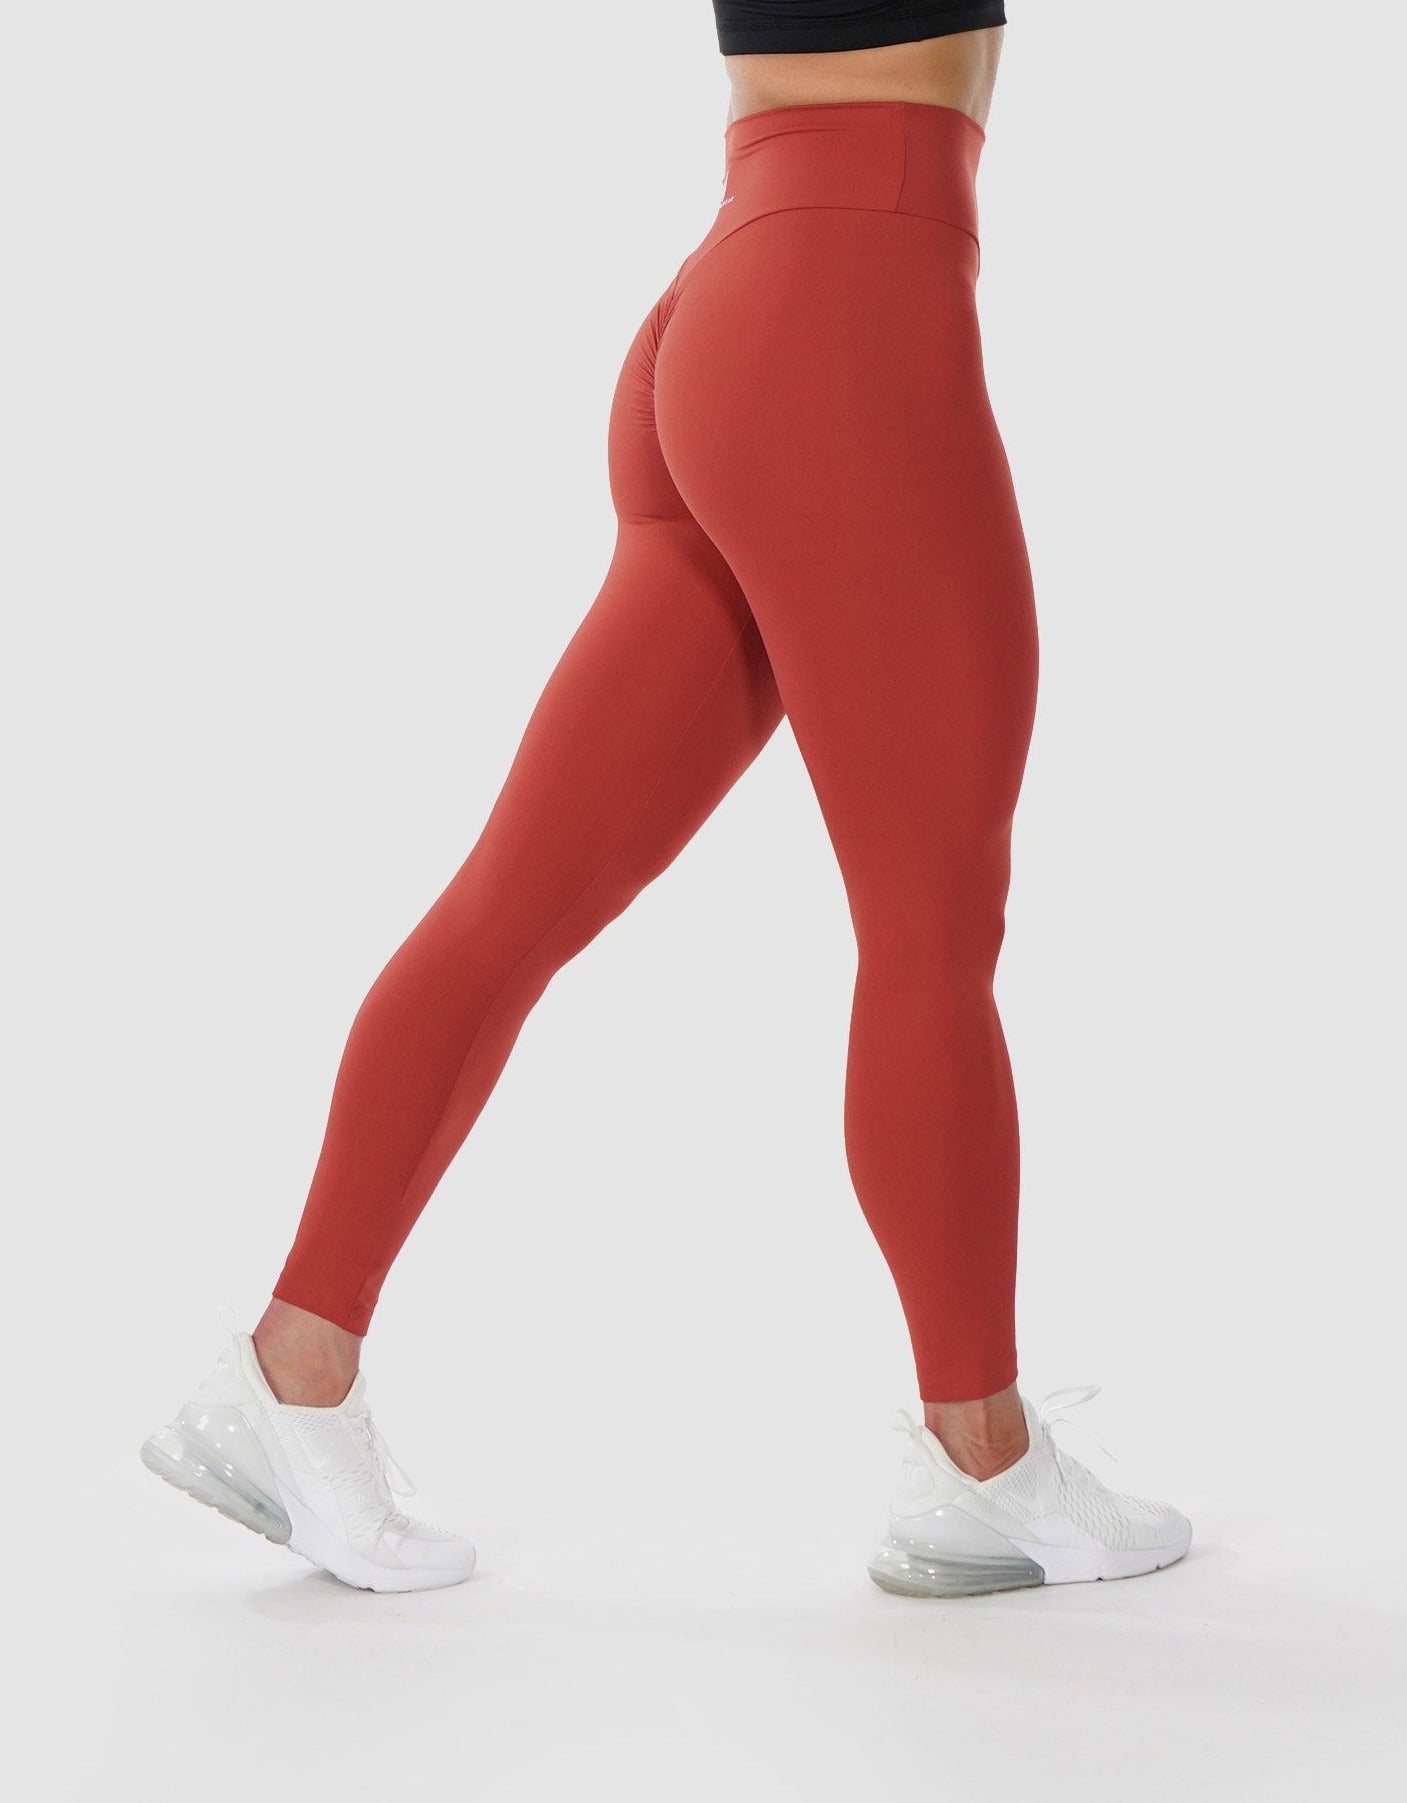 Gym Leggings Women Lycra Scrunch Leggings Sports Tights Yoga Pants